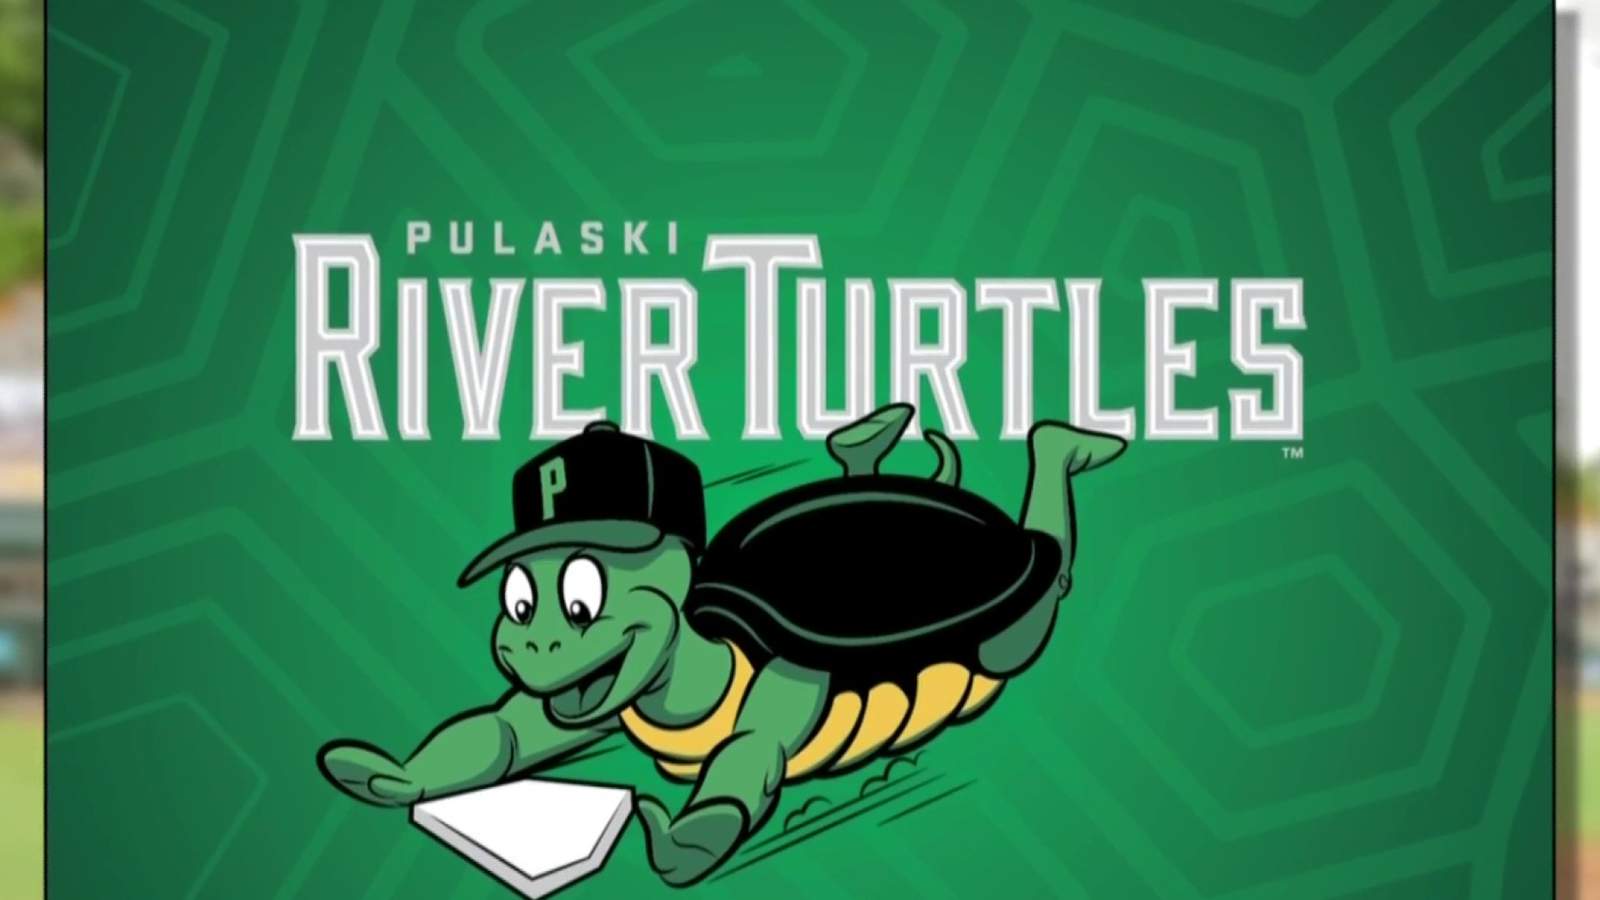 Calfee Park changes team name to the Pulaski River Turtles